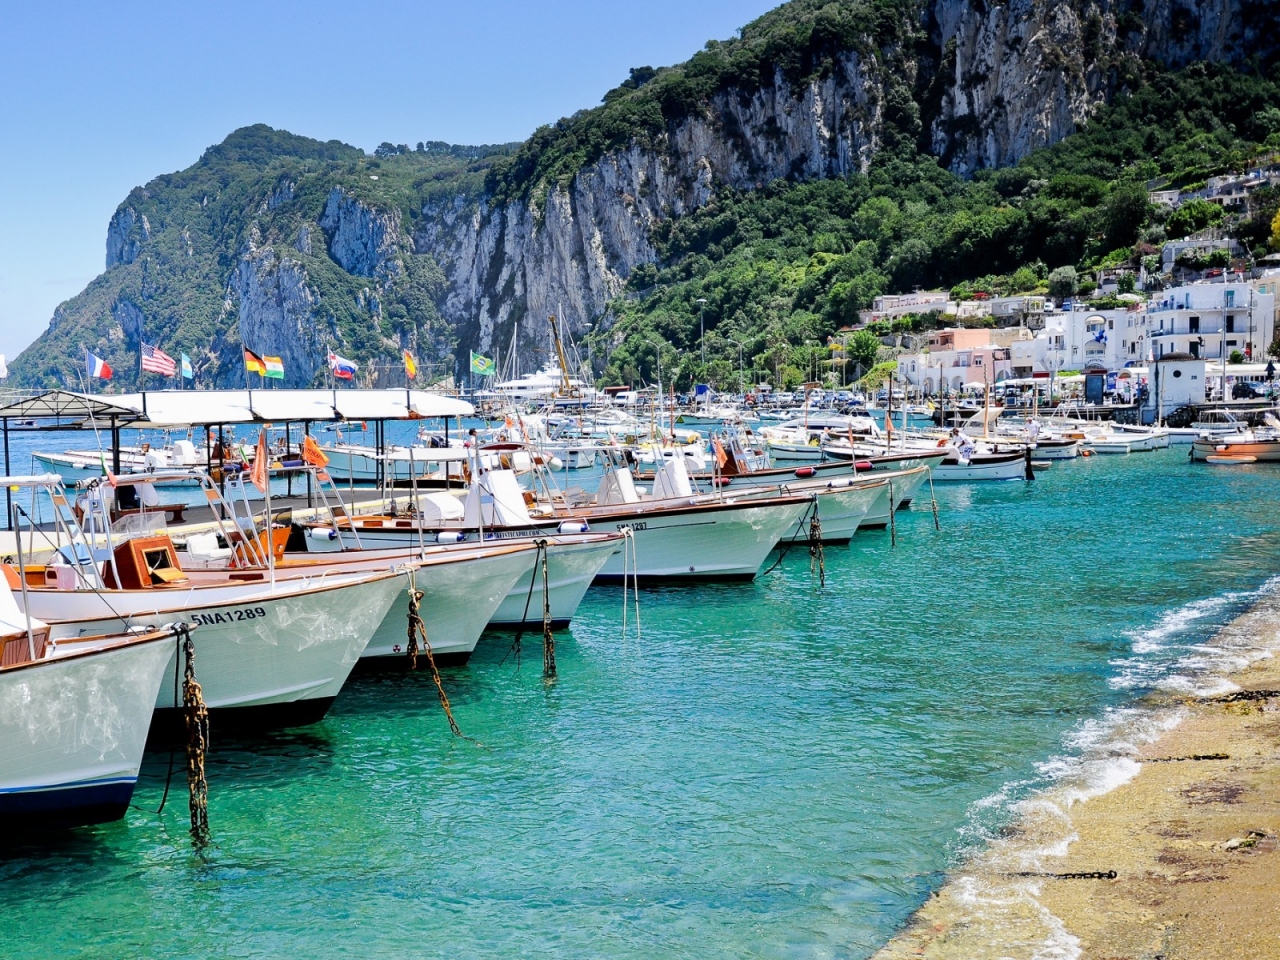 Capri Port View for 1280 x 960 resolution